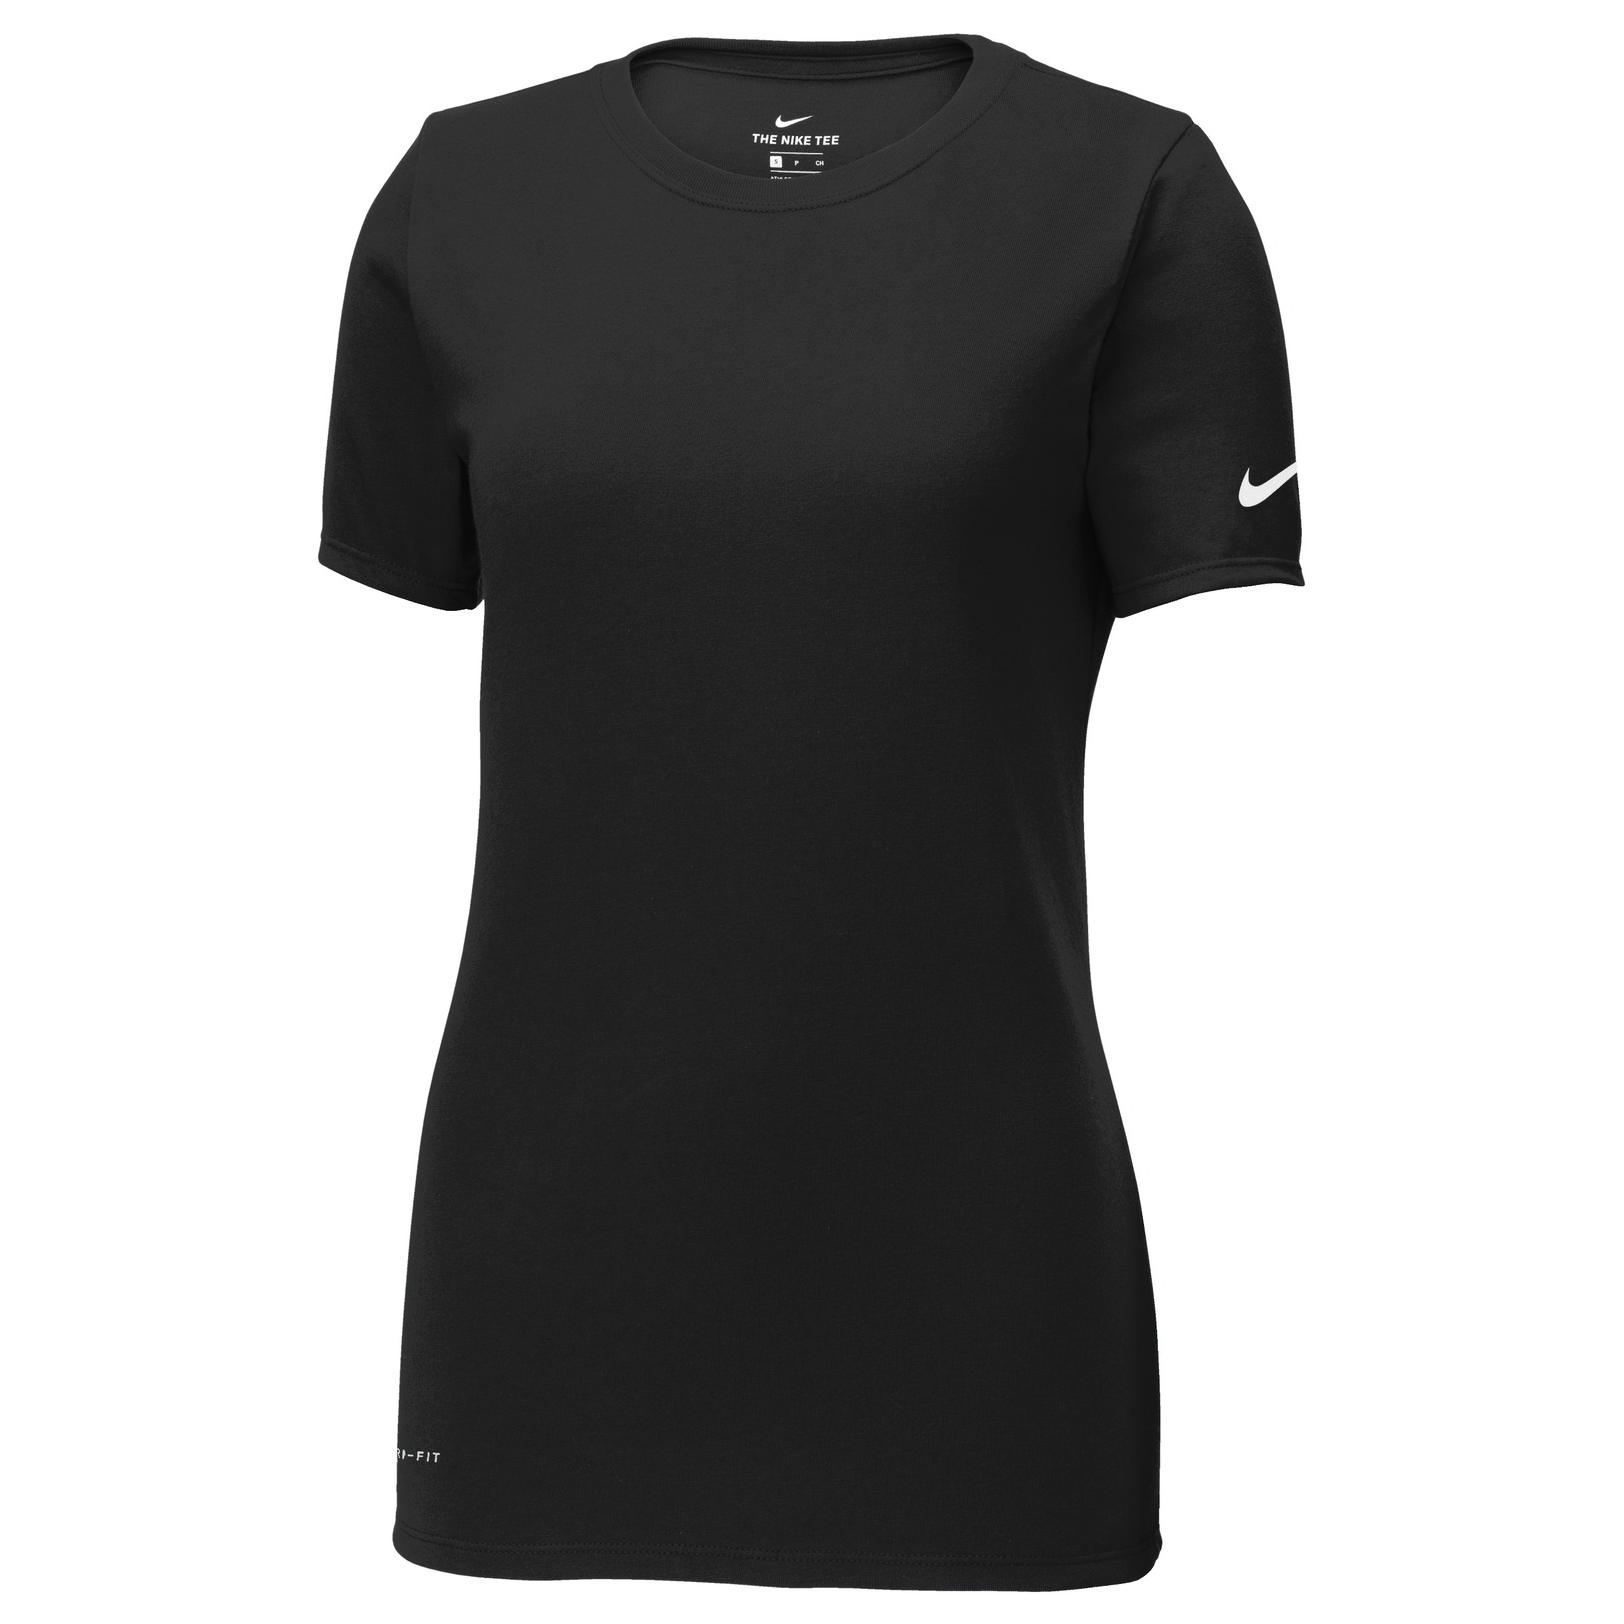 Nike NKBQ5234 Ladies Dri-FIT Cotton/Poly Scoop Neck Tee - Black | Full ...